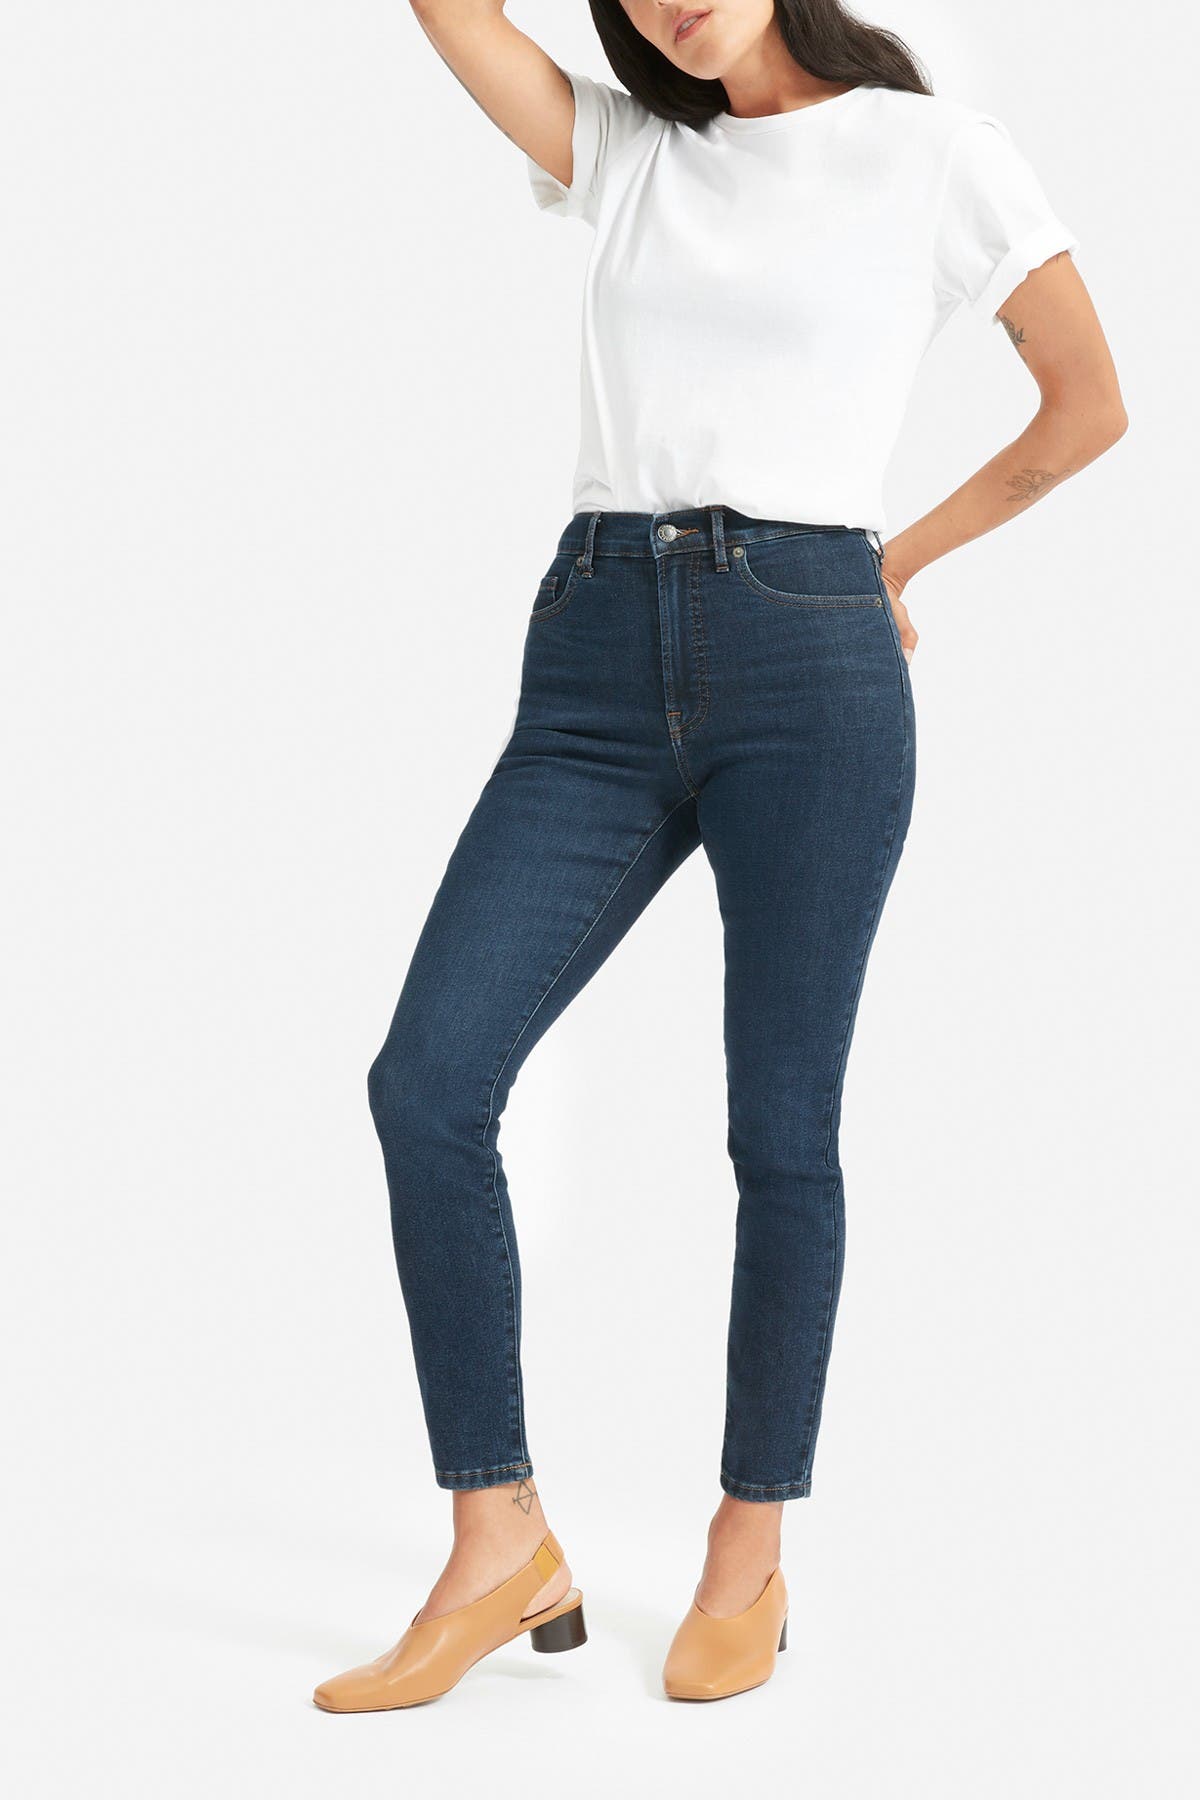 everlane jeans women's